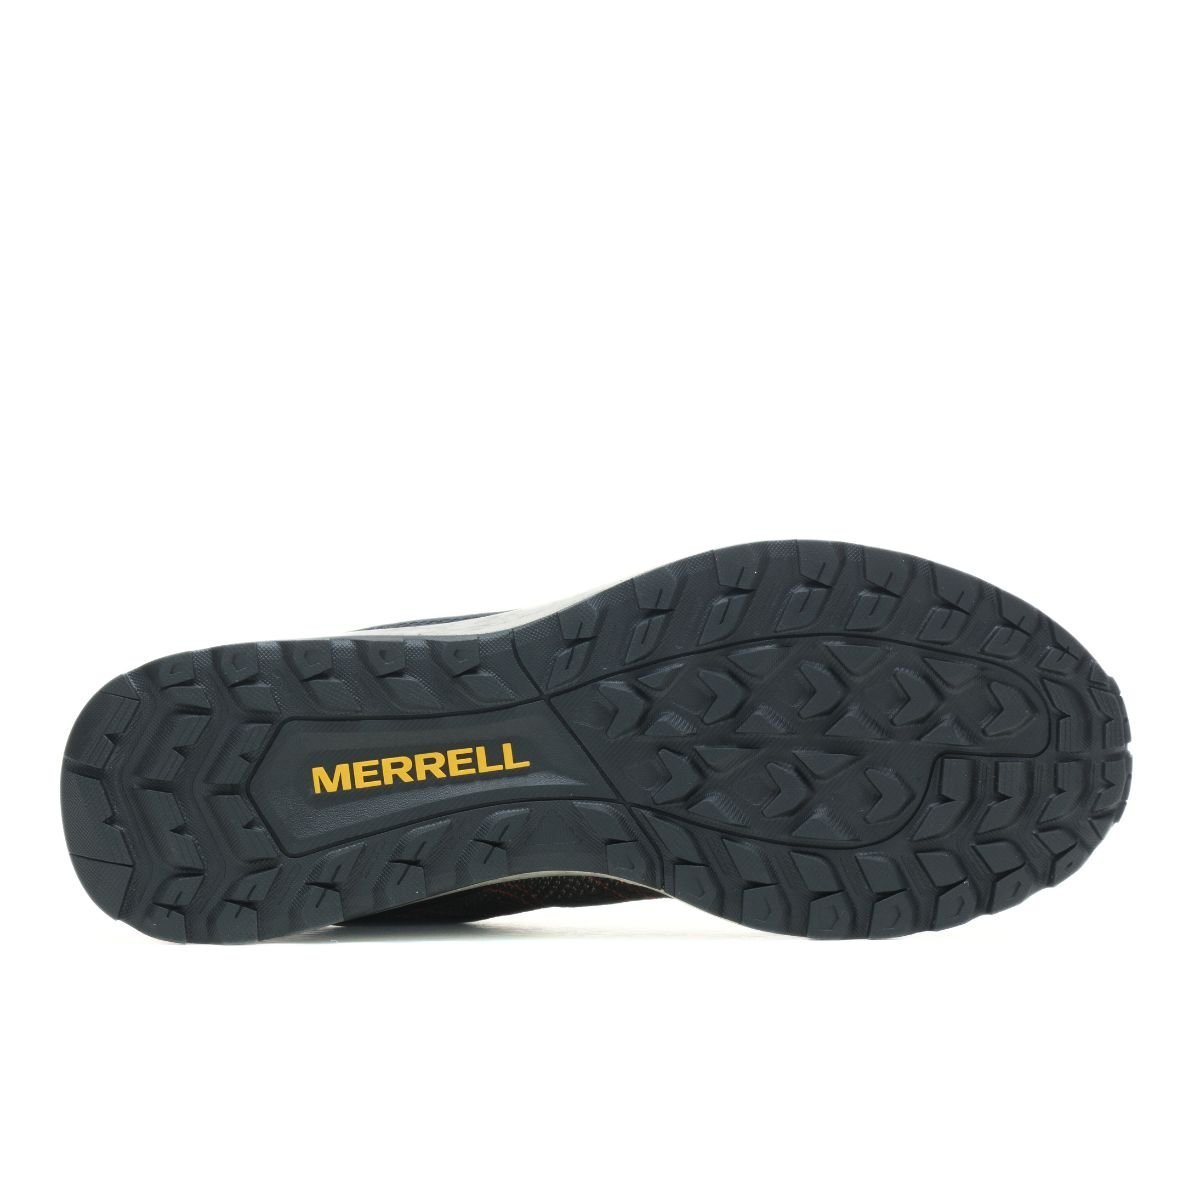 Topánky Merrell J067377 Fly Strike M - čierna/oranžová